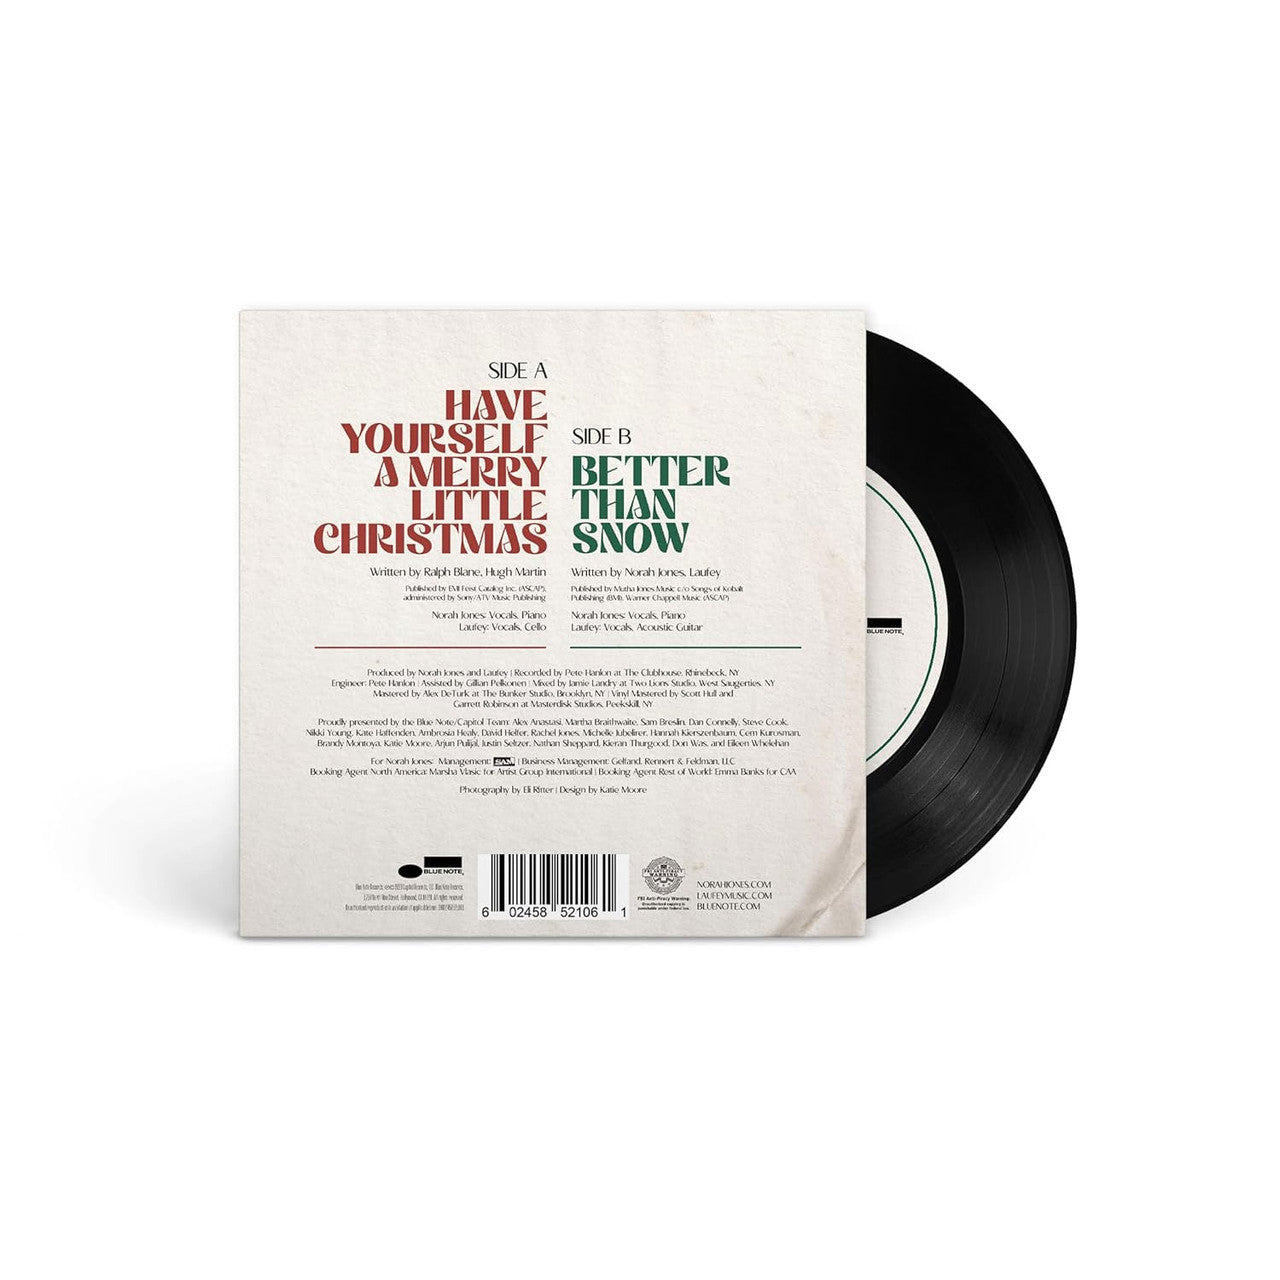 Order Norah Jones & Laufey - Christmas With You (45 rpm, 7" Vinyl Single)